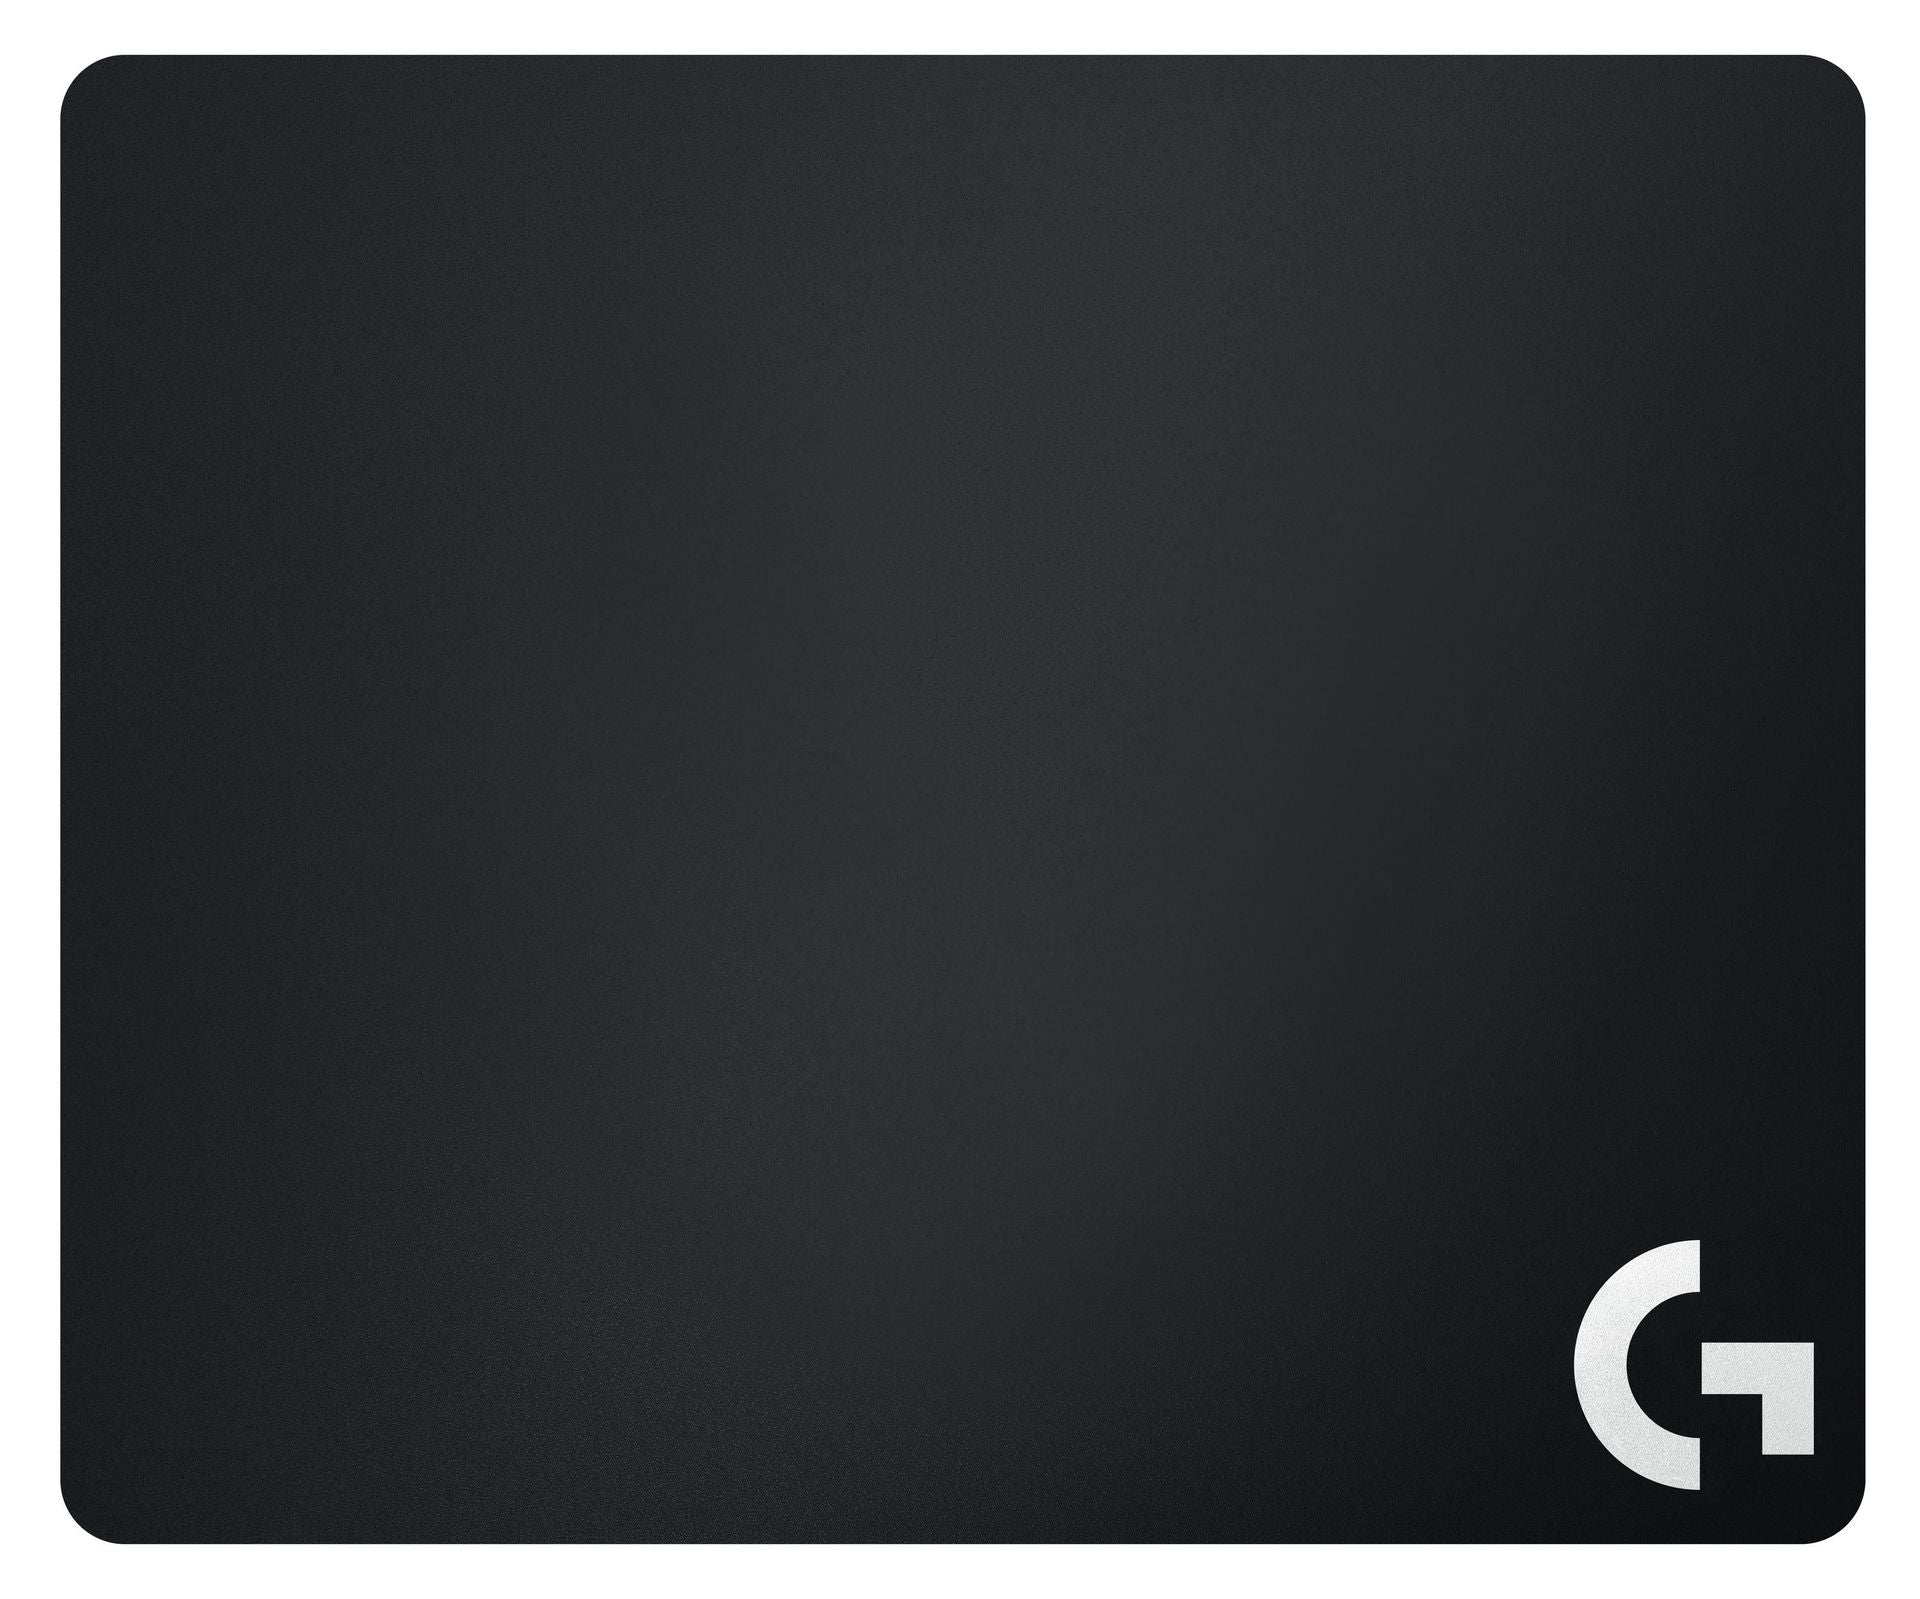 Logitech G240 Black Gaming mouse pad